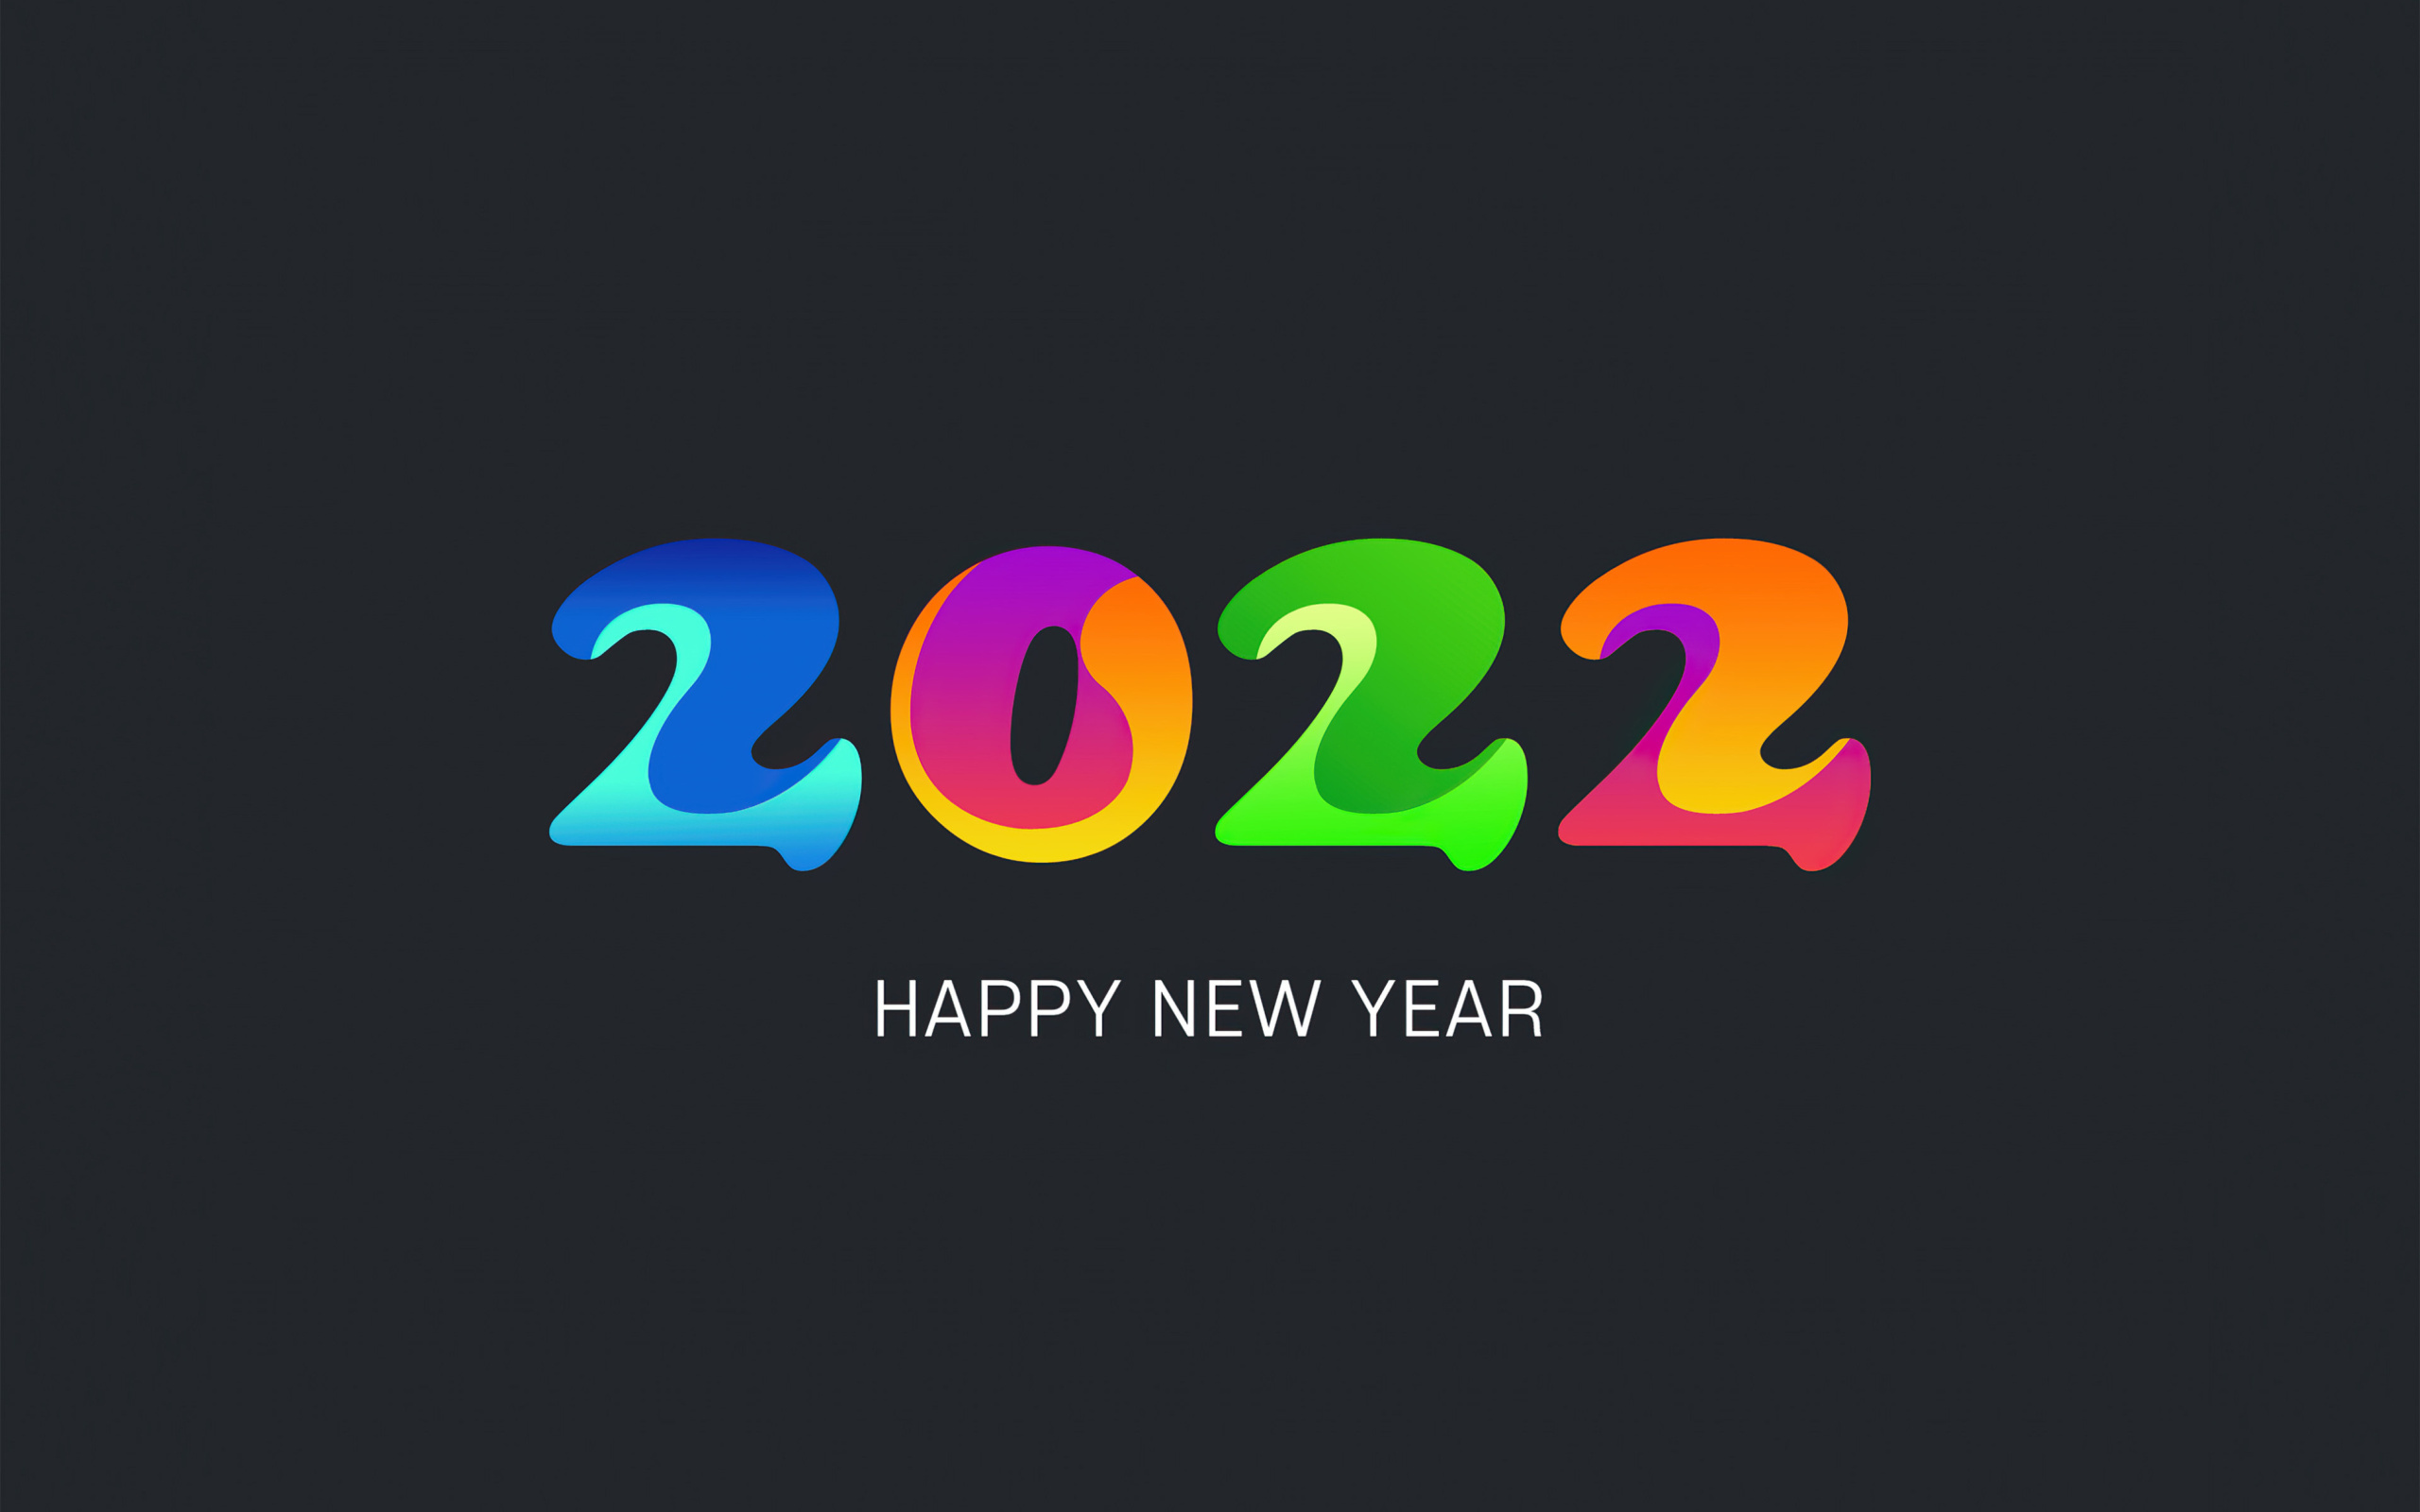 Happy new year 2022 wallpaper 2560x1600